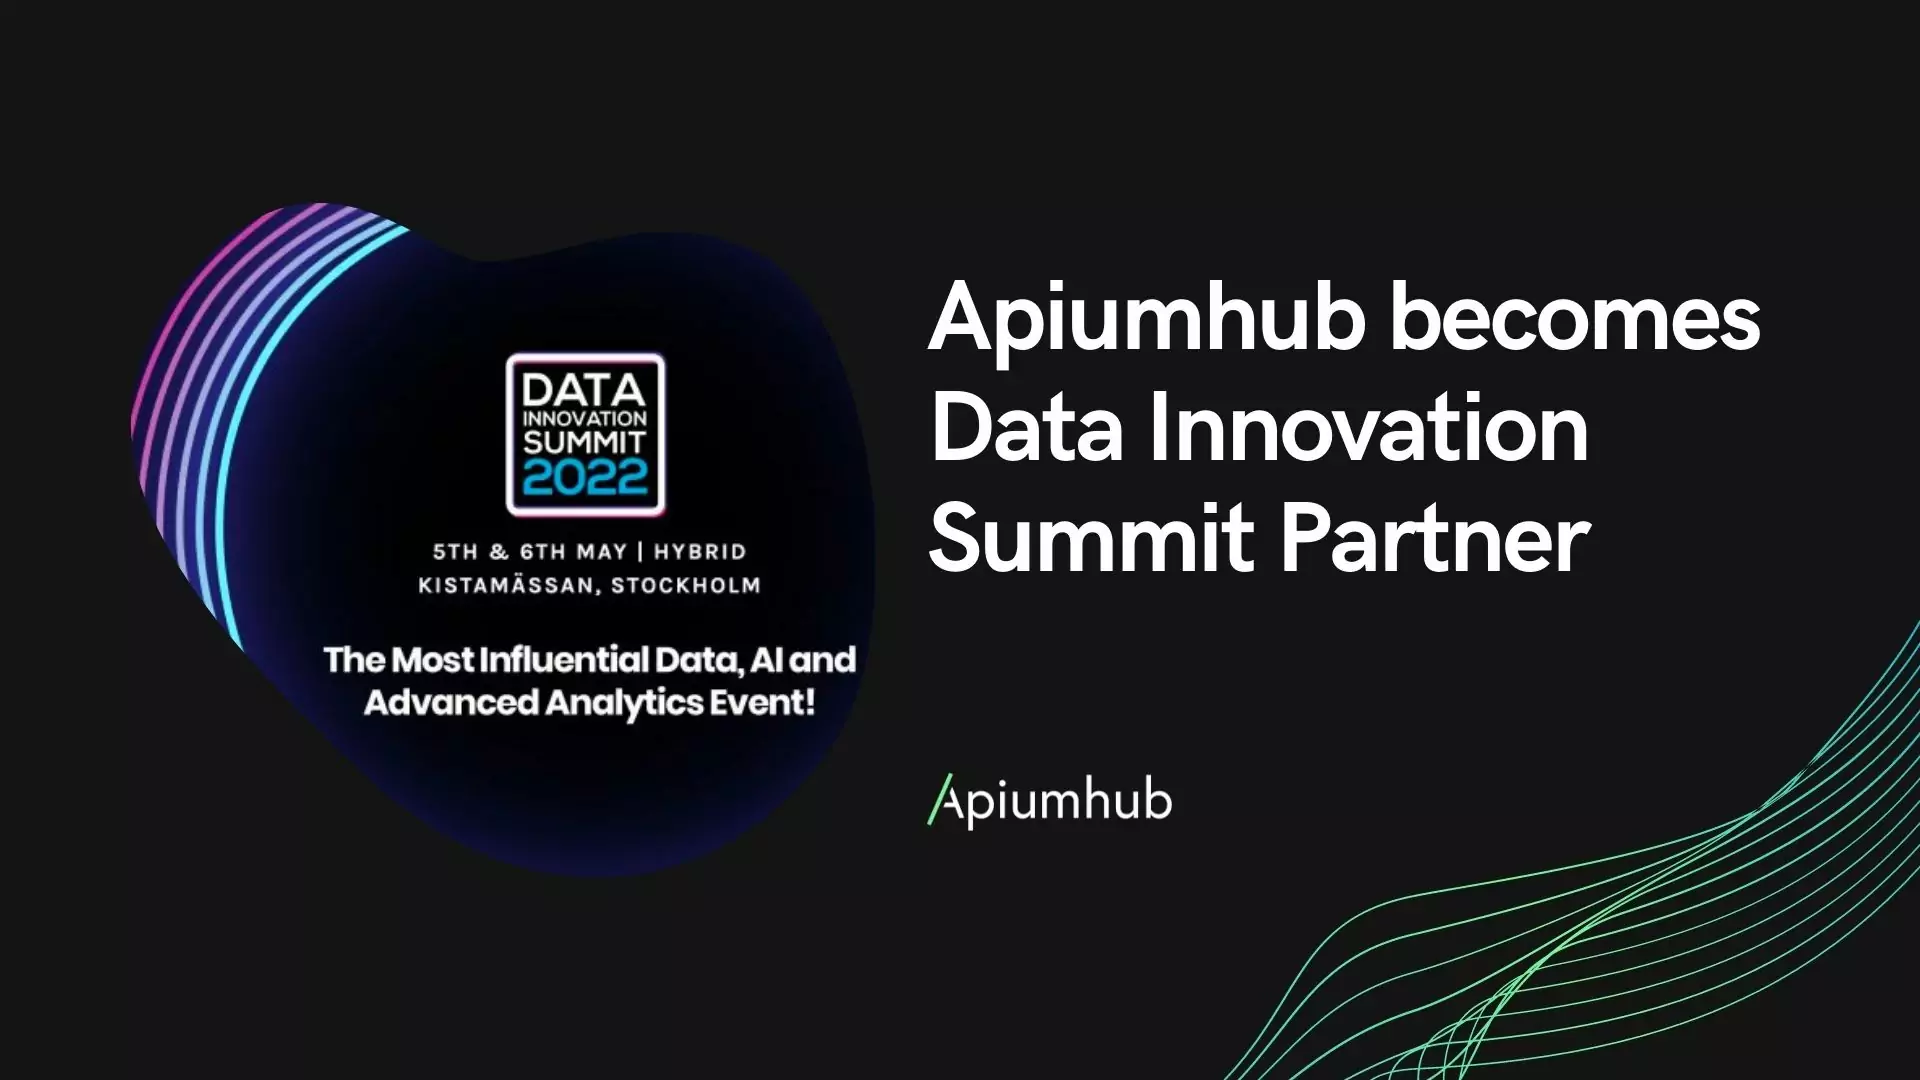 Apiumhub becomes Data Innovation Summit Partner